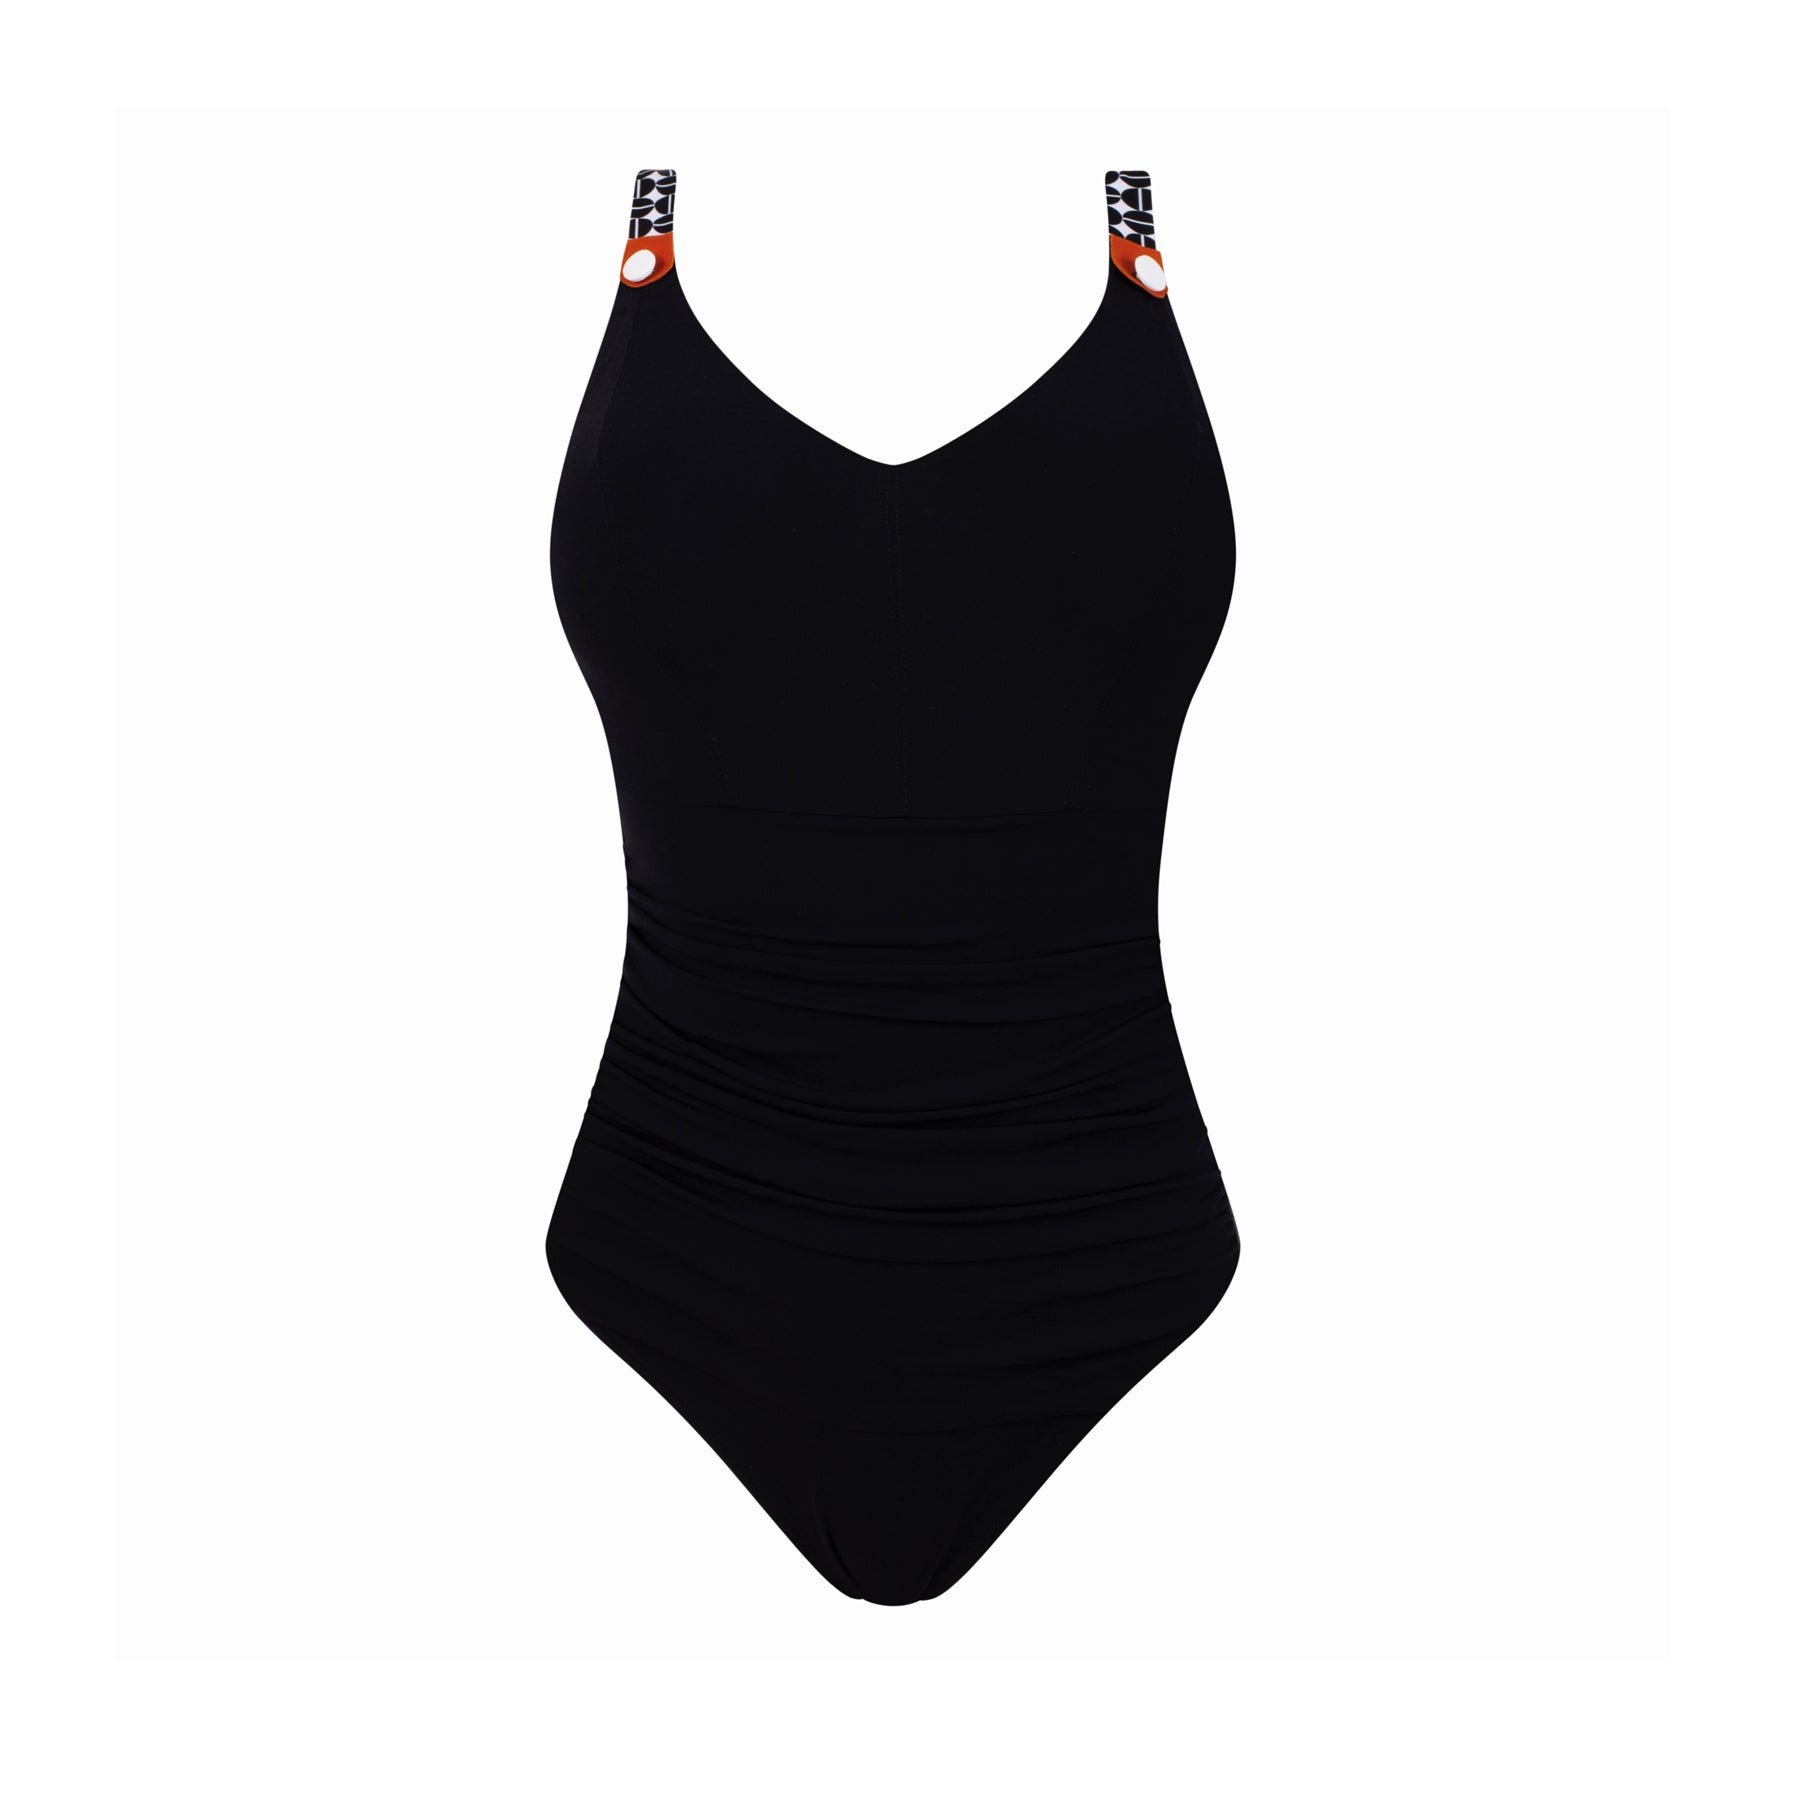 Ameona Infinity Pool One-Piece Swimsuit - black/white - MarieSue Lingerie